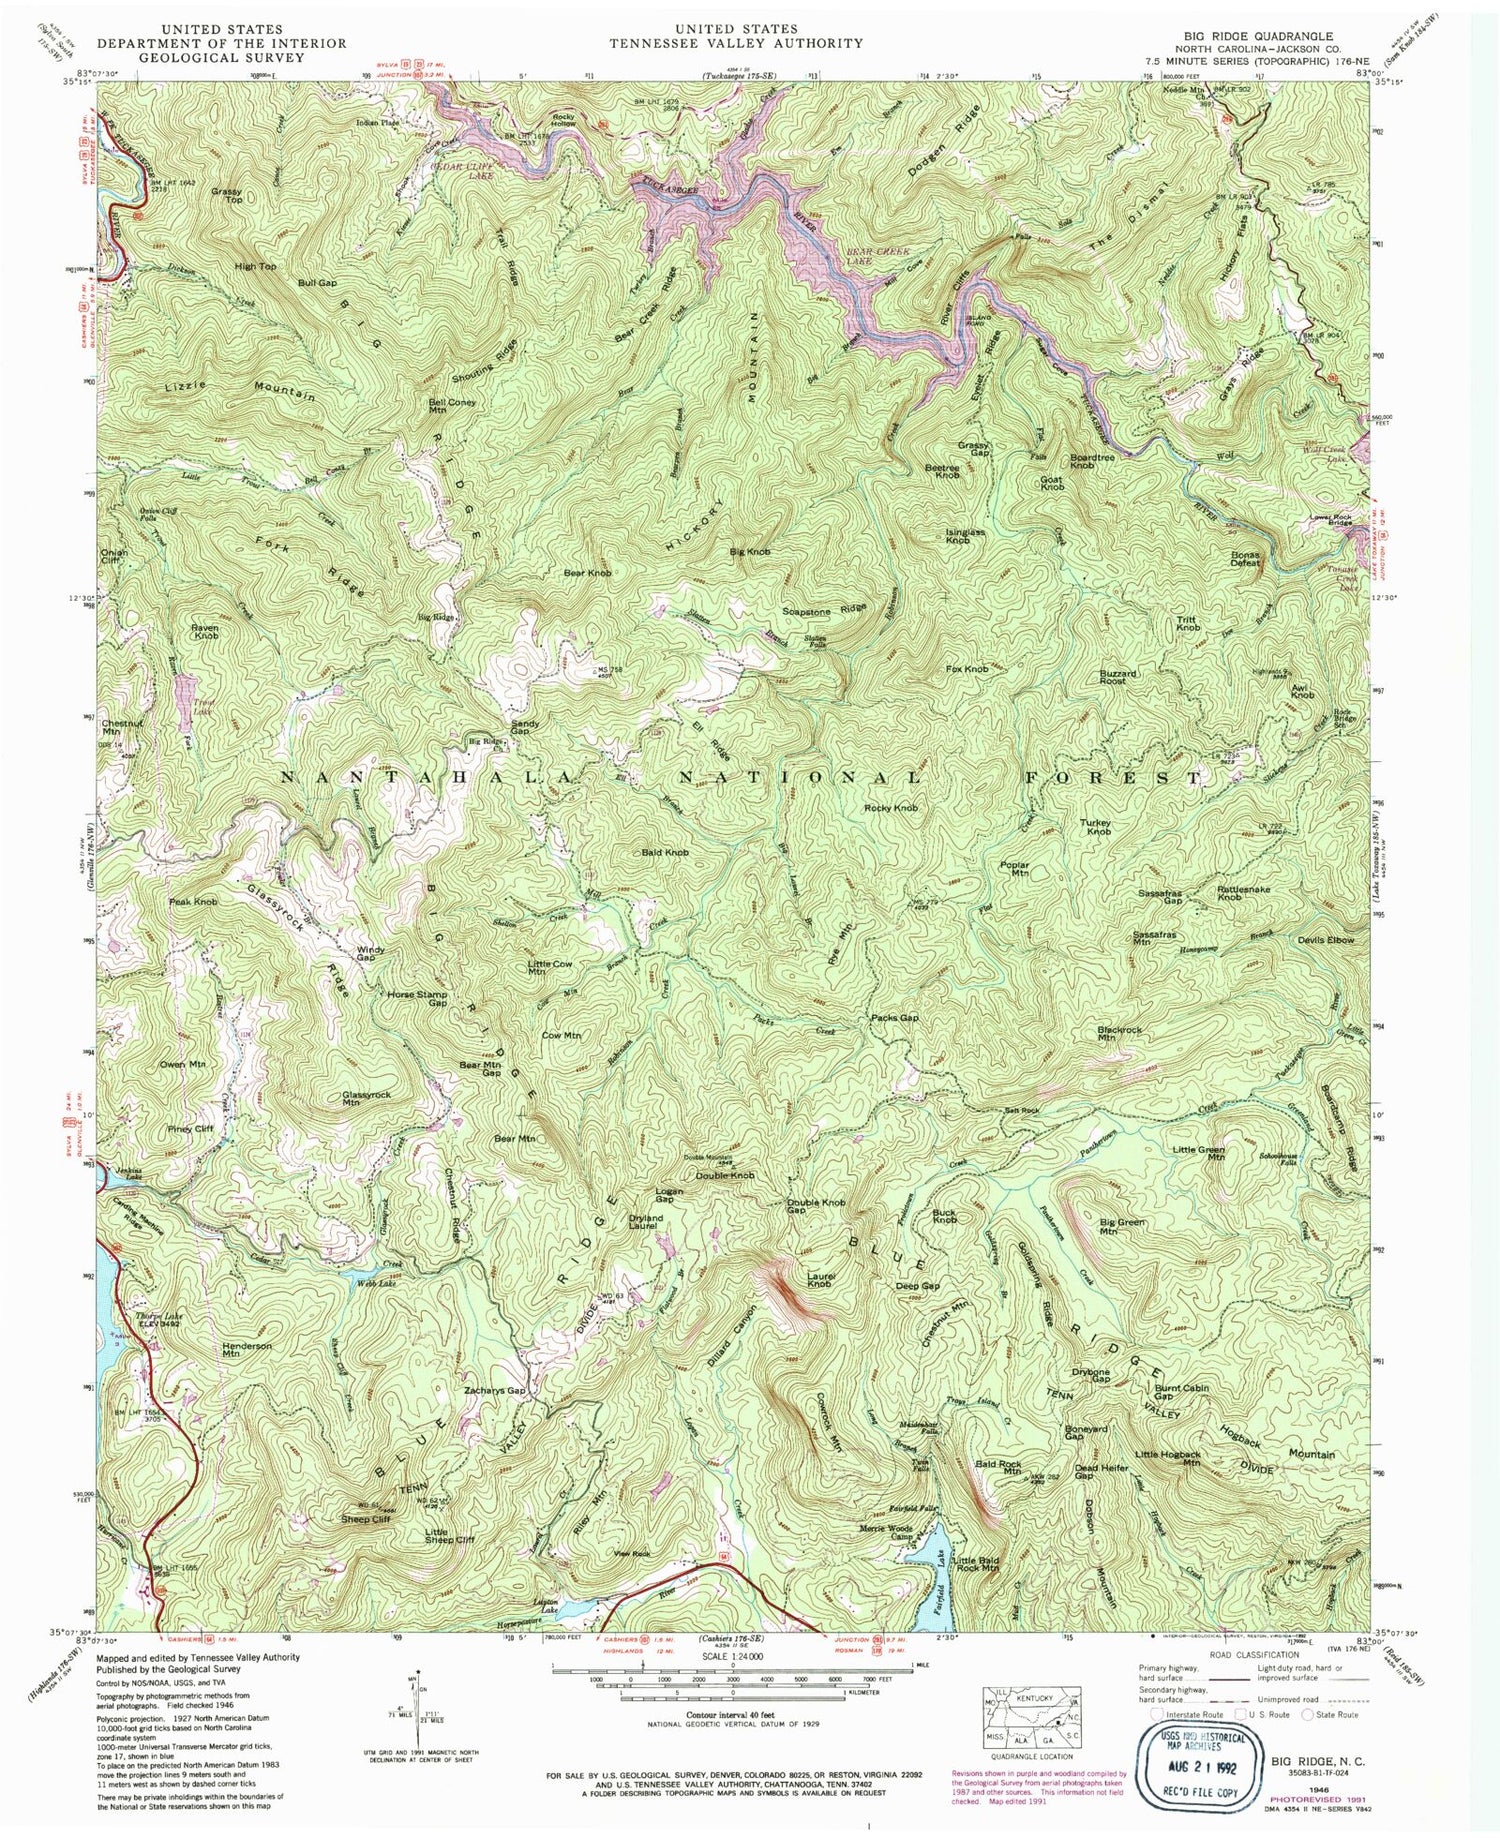 USGS Classic Big Ridge North Carolina 7.5'x7.5' Topo Map Image